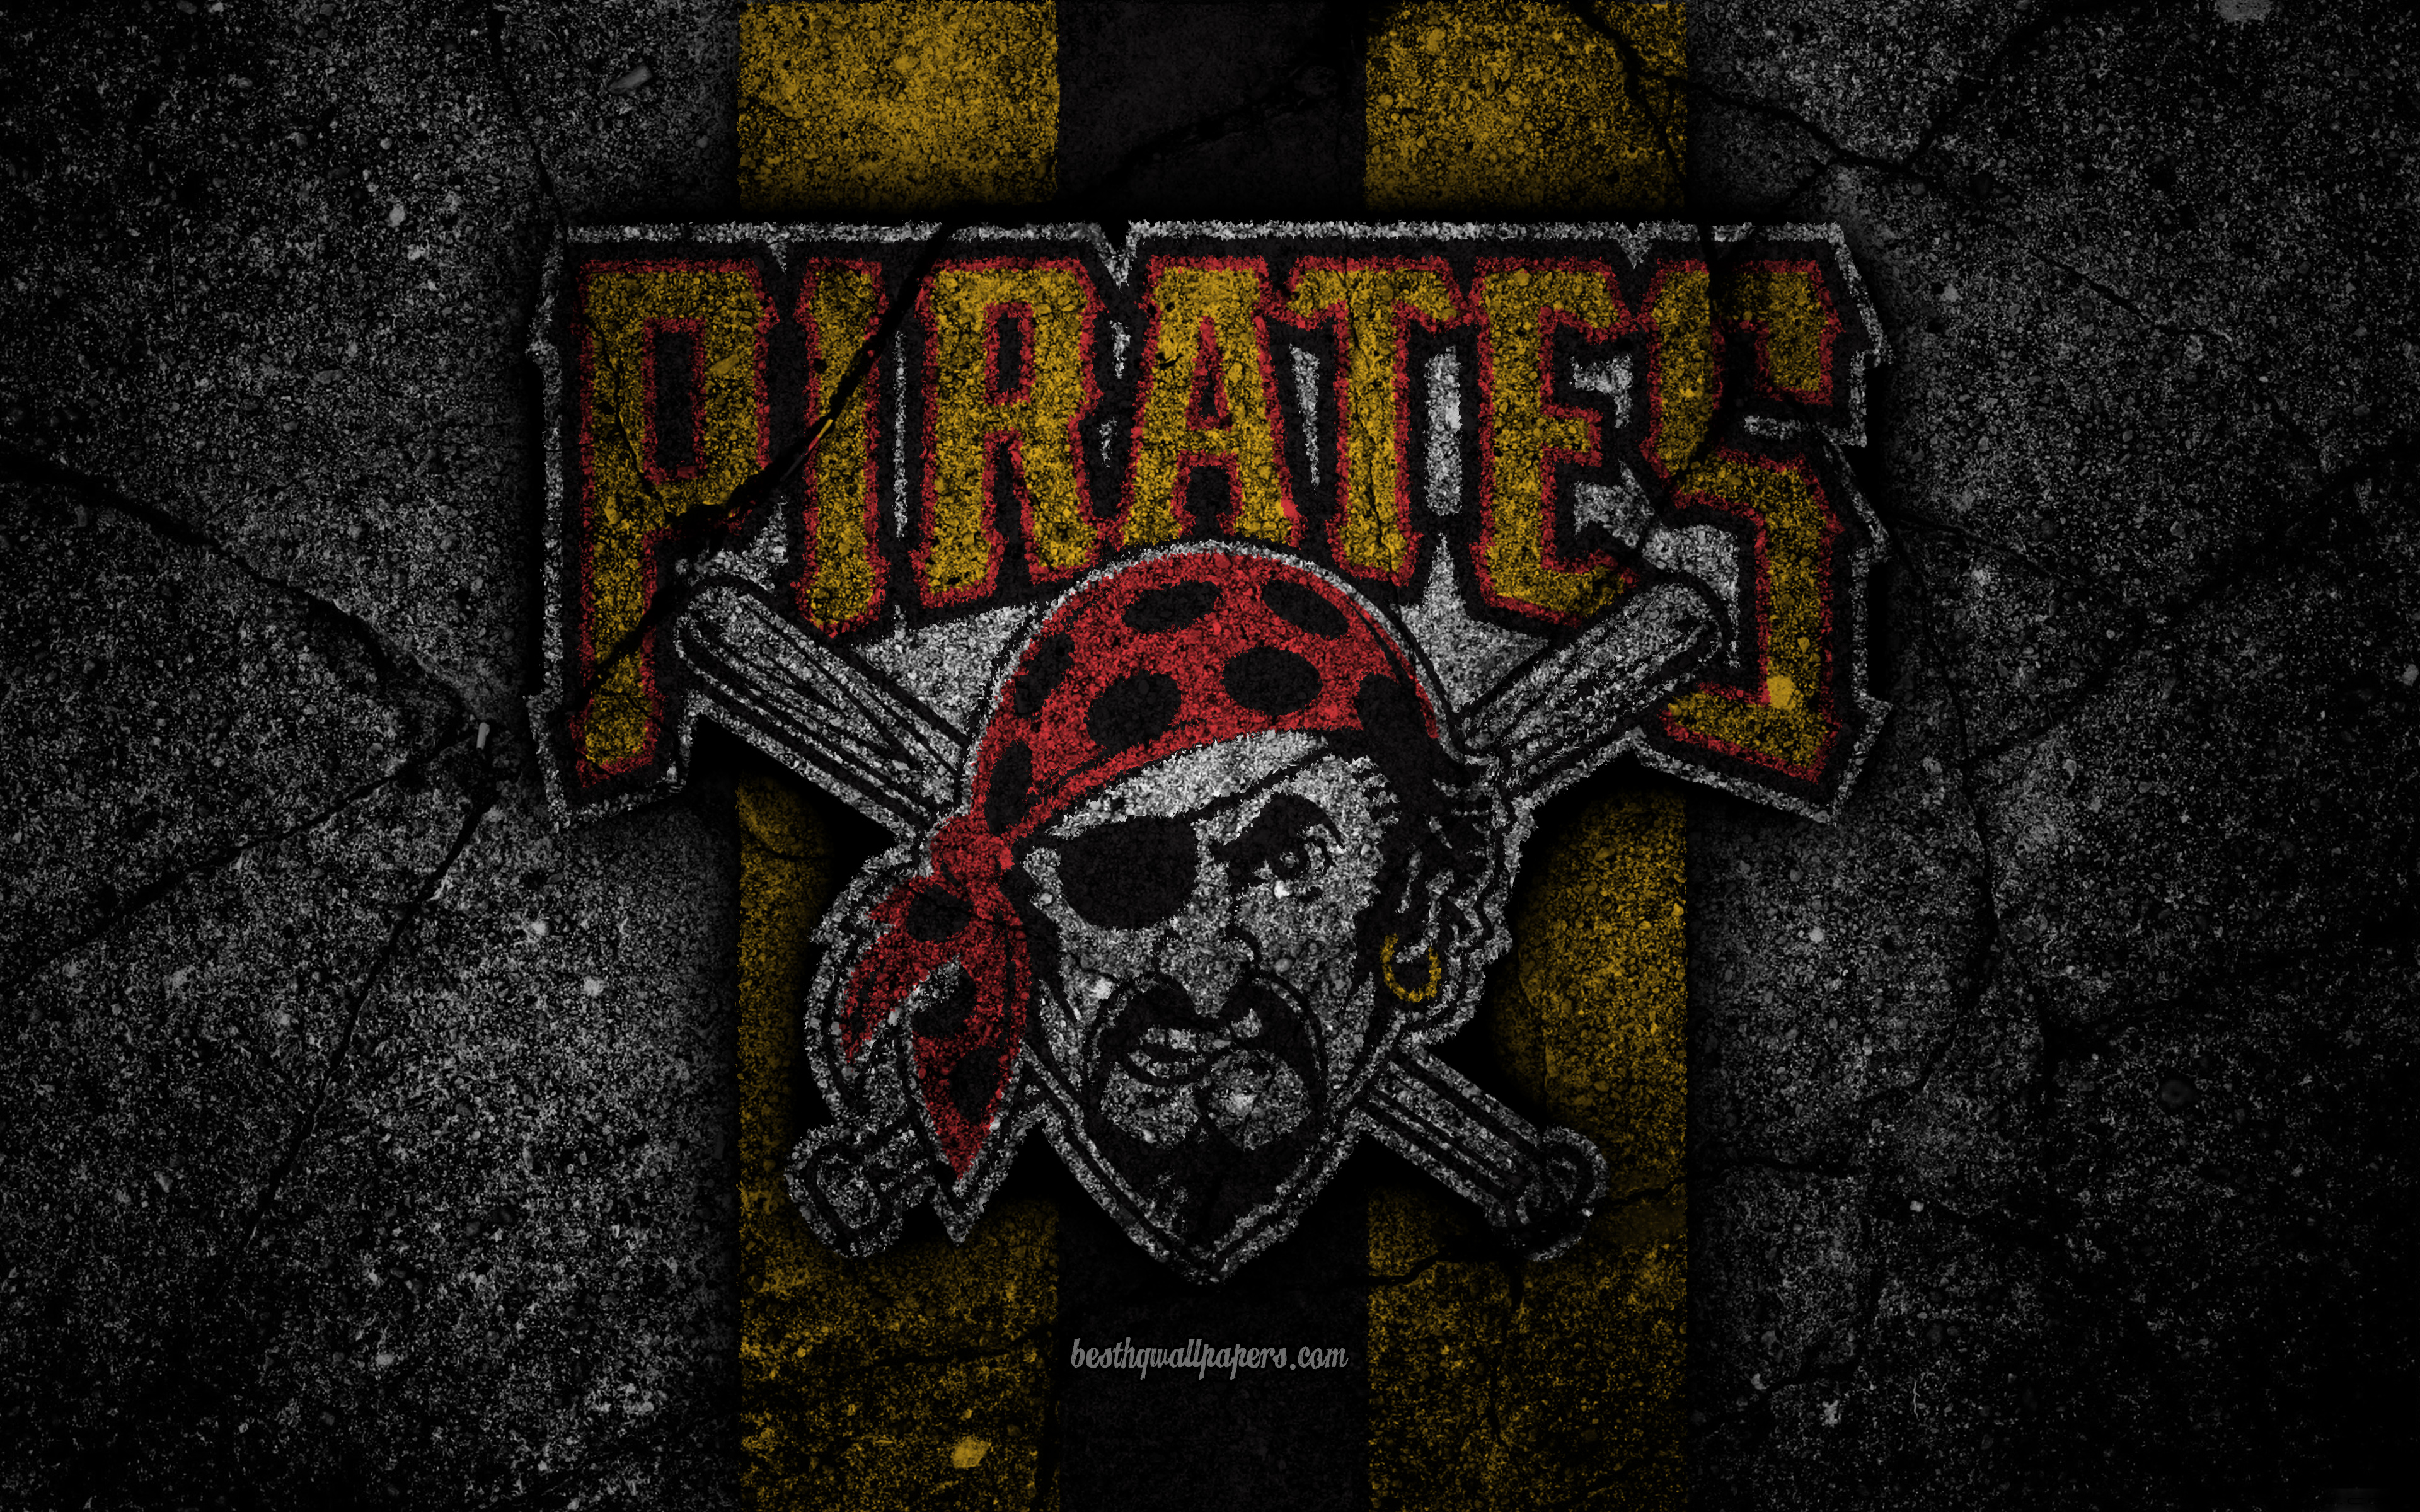 Download wallpapers 4k Pittsburgh Pirates logo MLB baseball